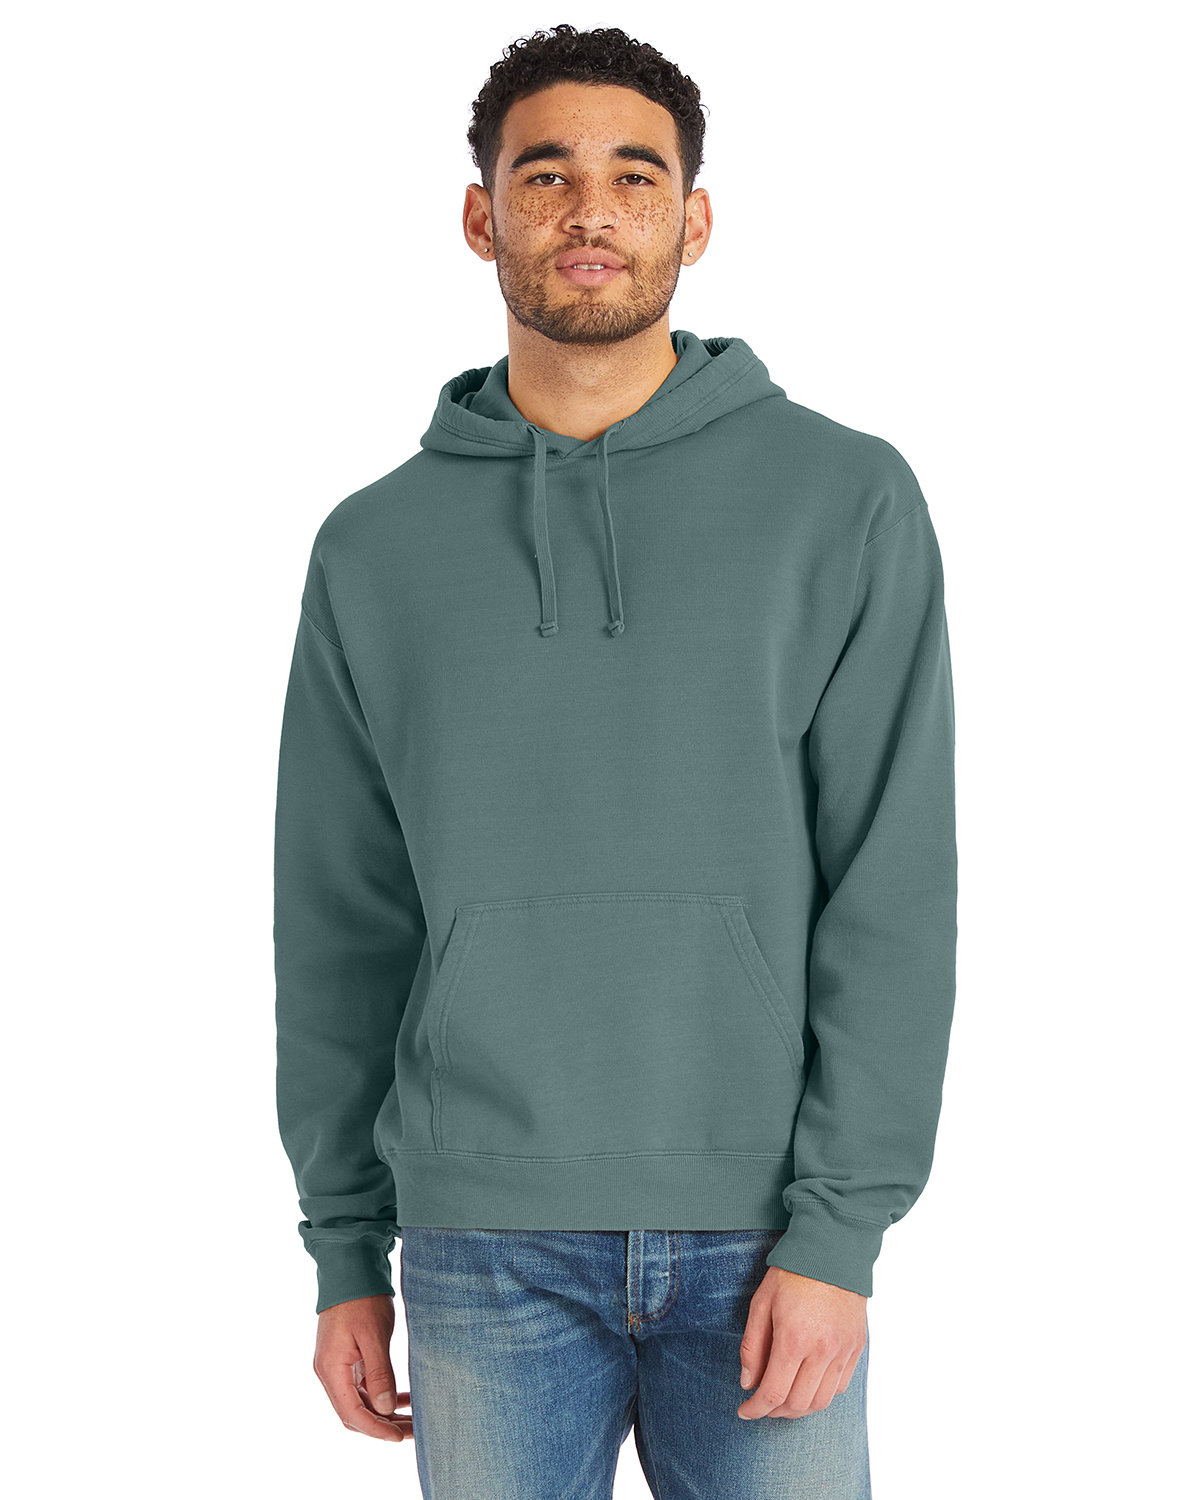 ComfortWash by Hanes Unisex Pullover Hooded Sweatshirt CYPRESS GREEN 